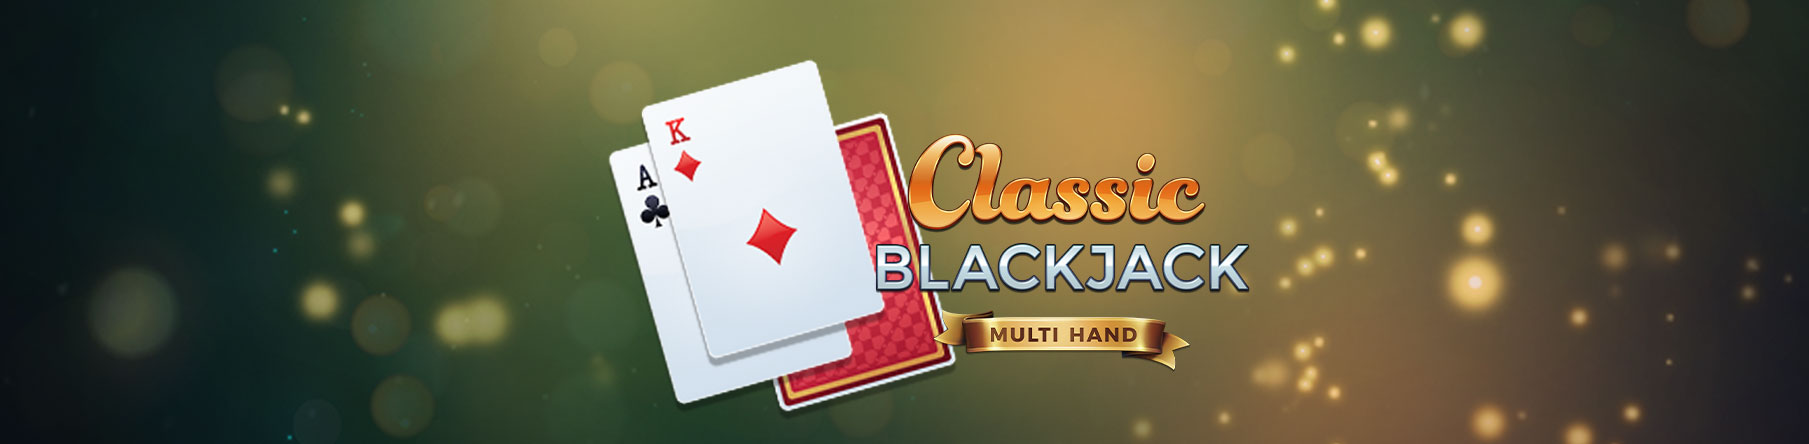 Blackjack Multi Hand Classic  6 Deck